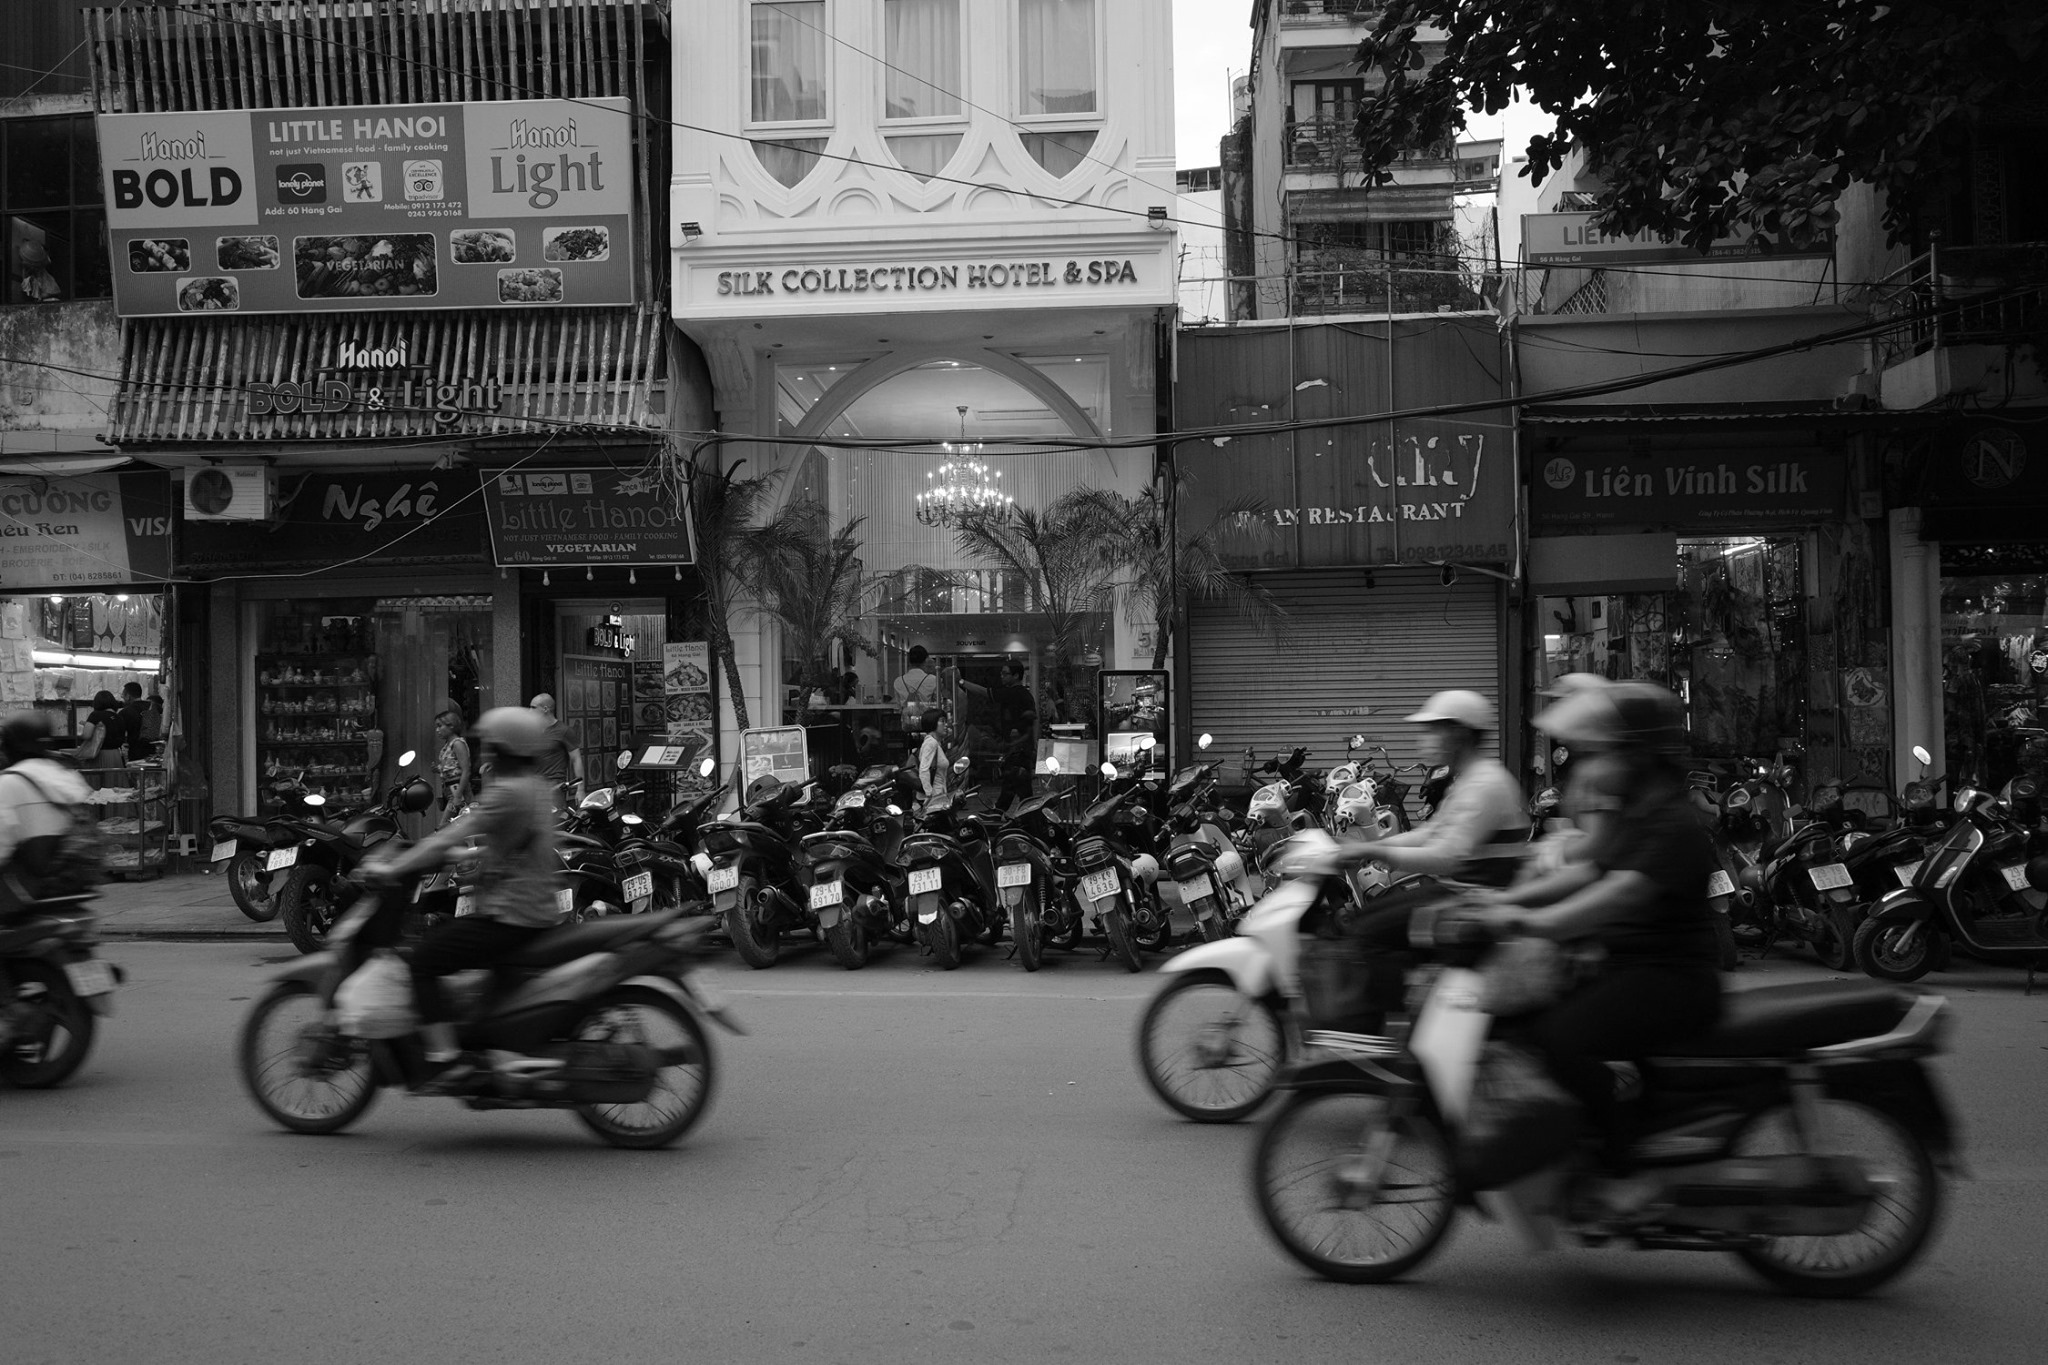 Capturing motion in photography - Hanoi, Vietnam